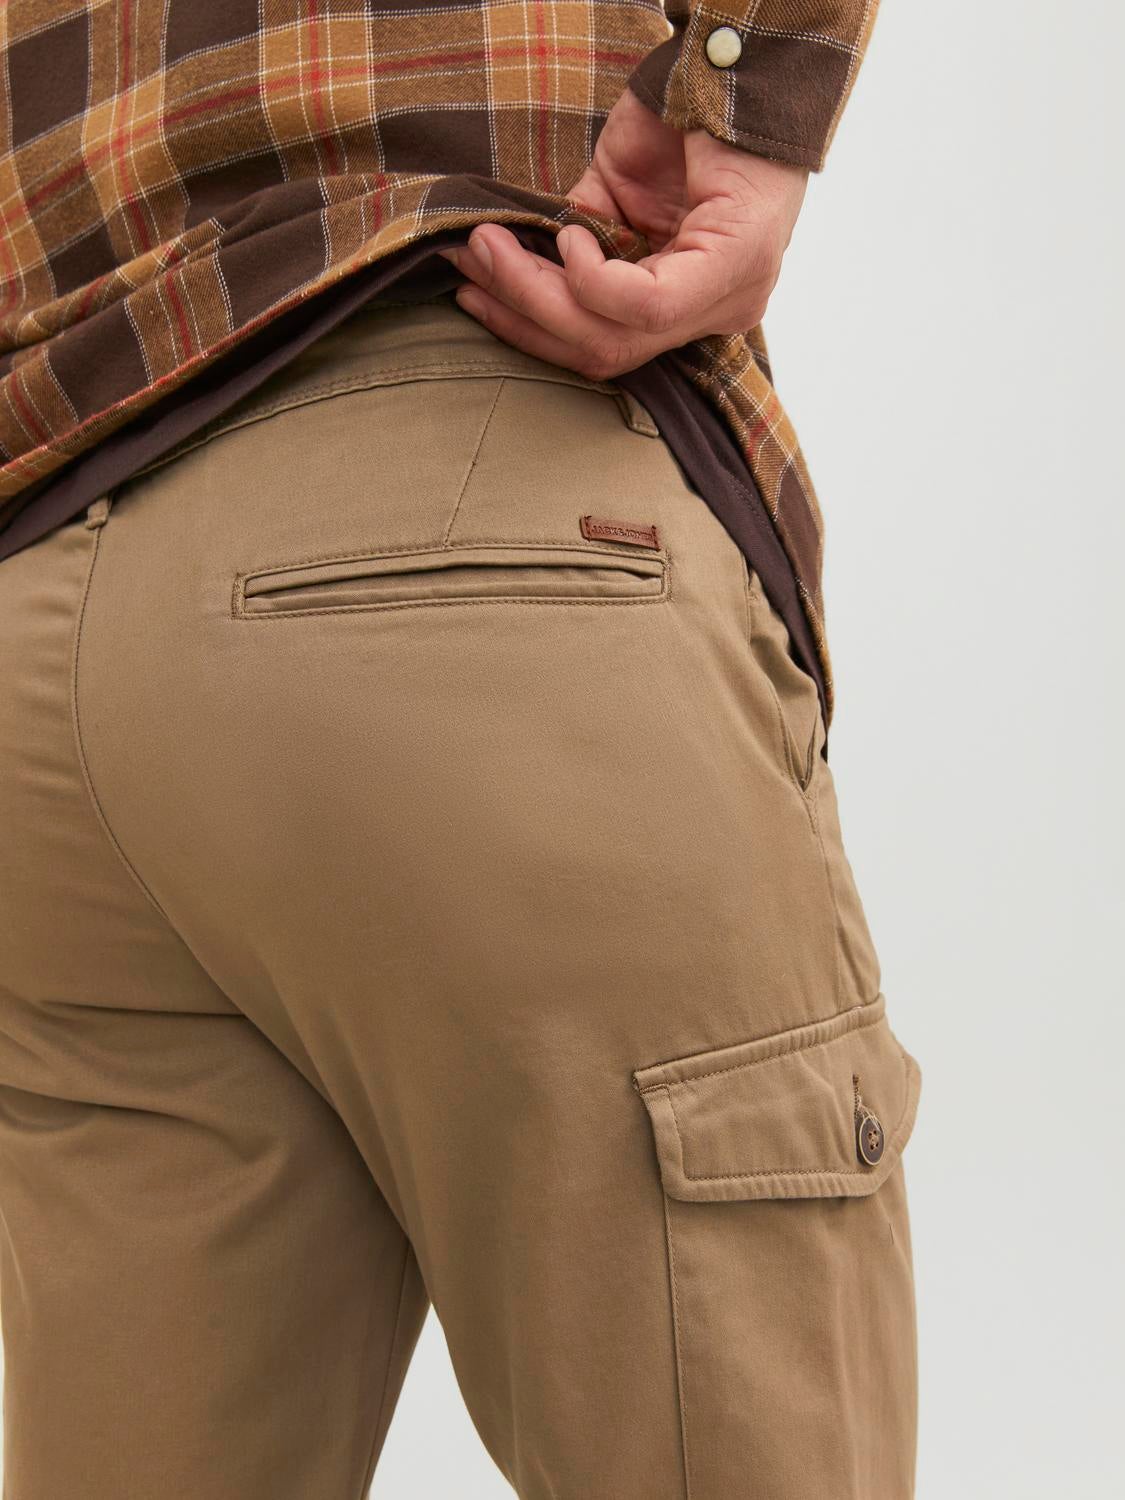 Timberland Mens 34 Regular Fit Cargo Pants Tan | eBay